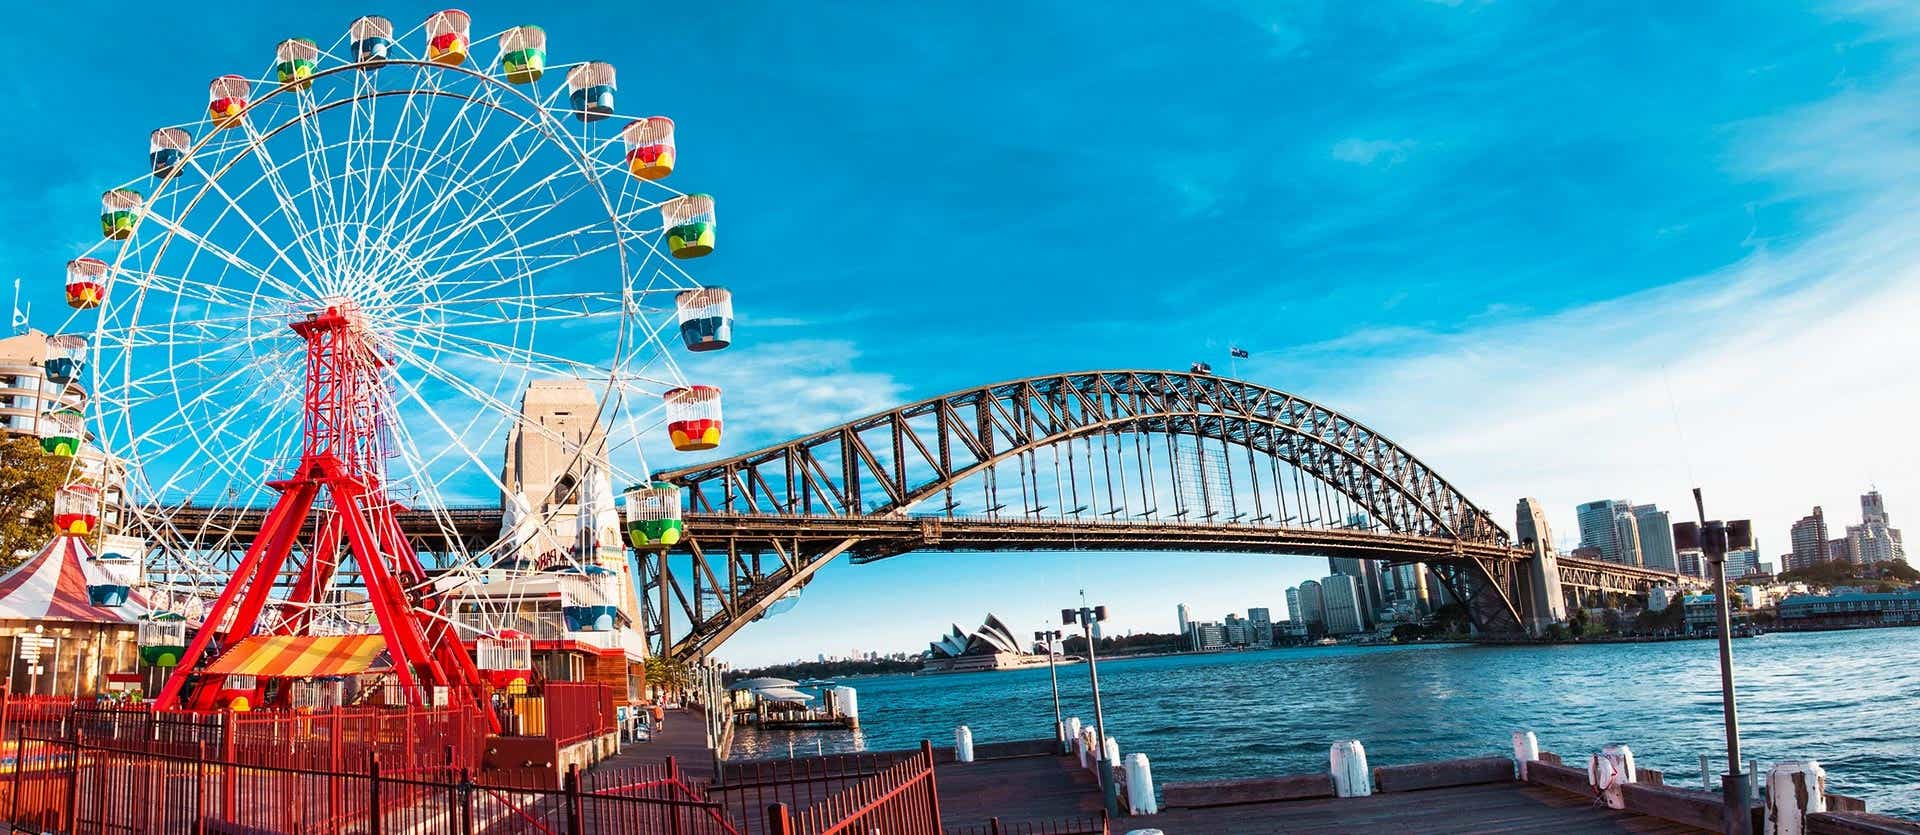 Harbour Bridge <span class="iconos separador"></span> Sydney